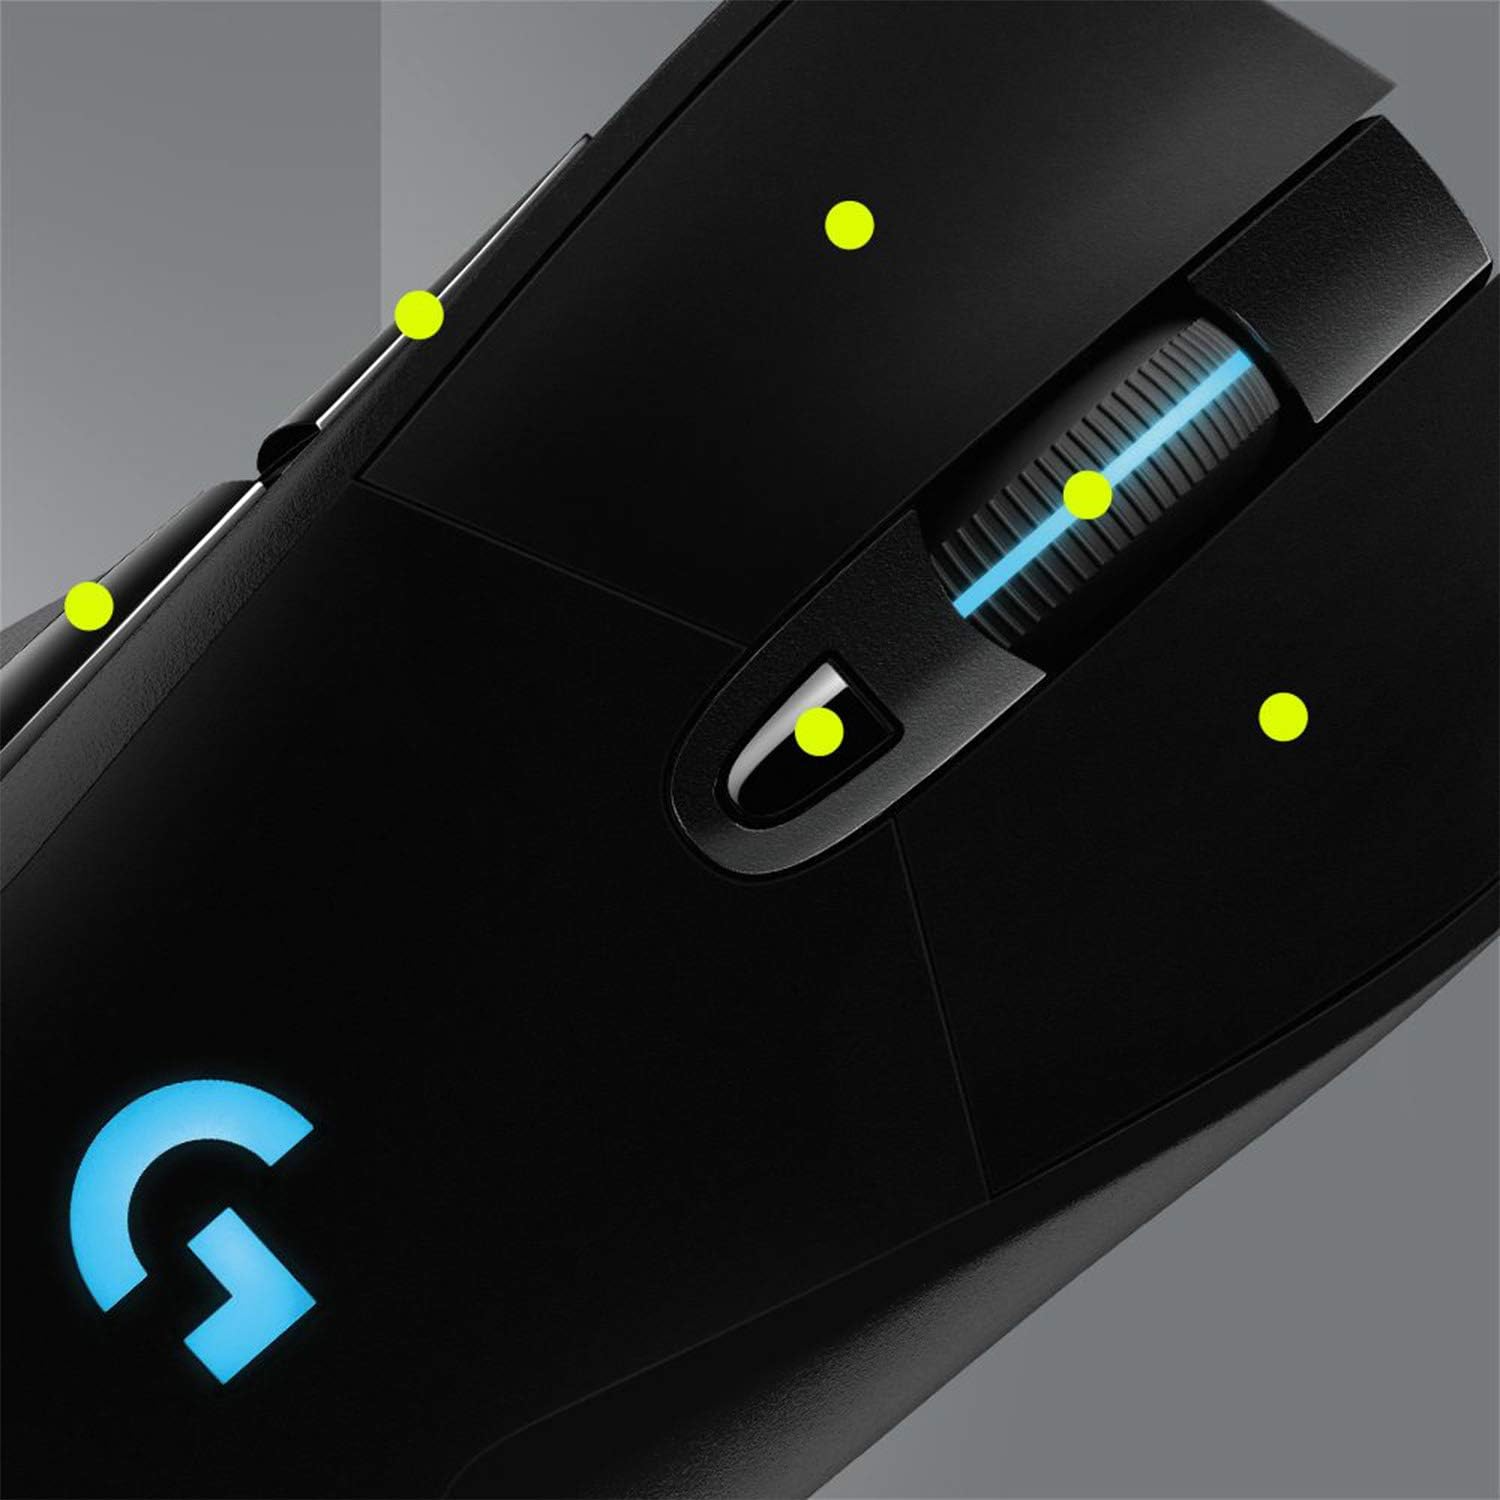 Logitech-G703-Lightspeed-Wireless-Gaming-Mouse